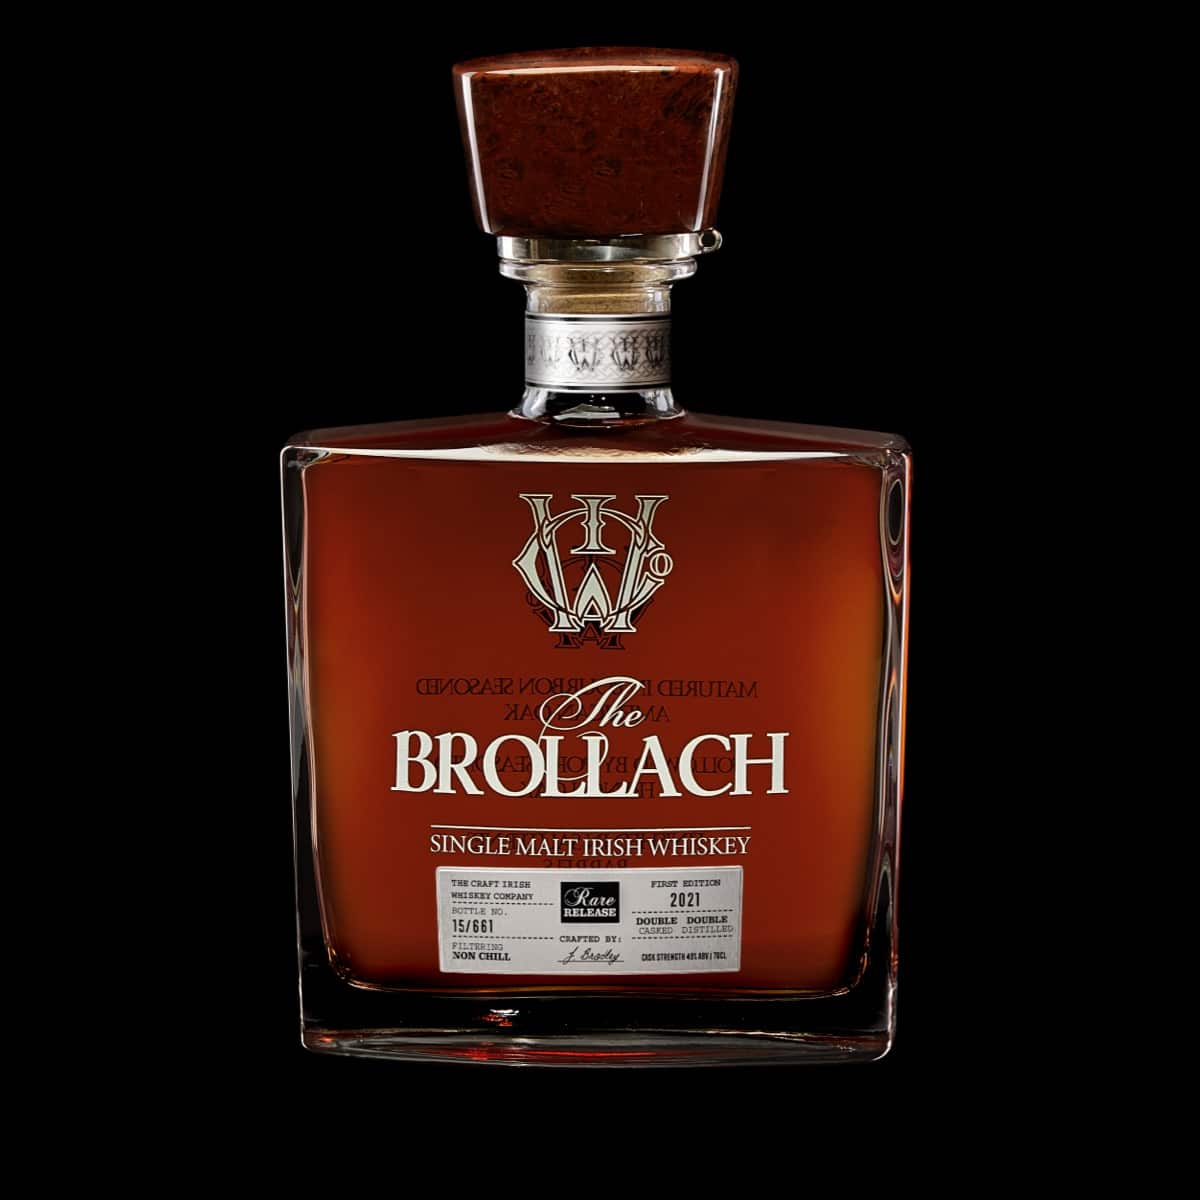 A bottle of the best single malt Irish whiskey, The Brollach